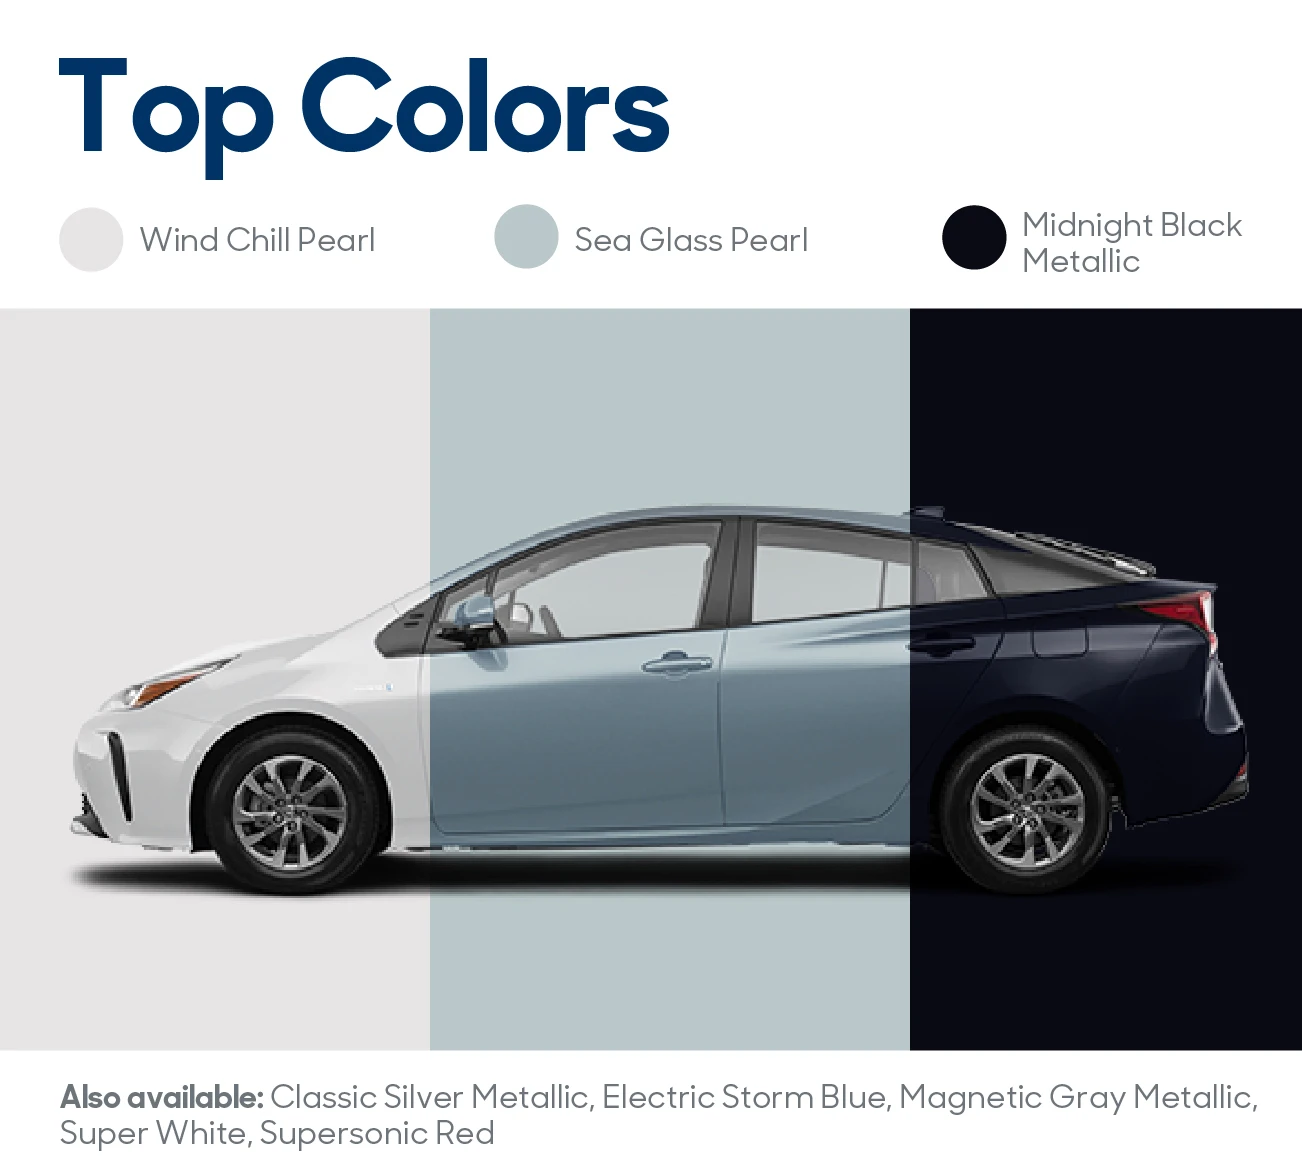 2021 Toyota Prius Review: Top Colors | CarMax